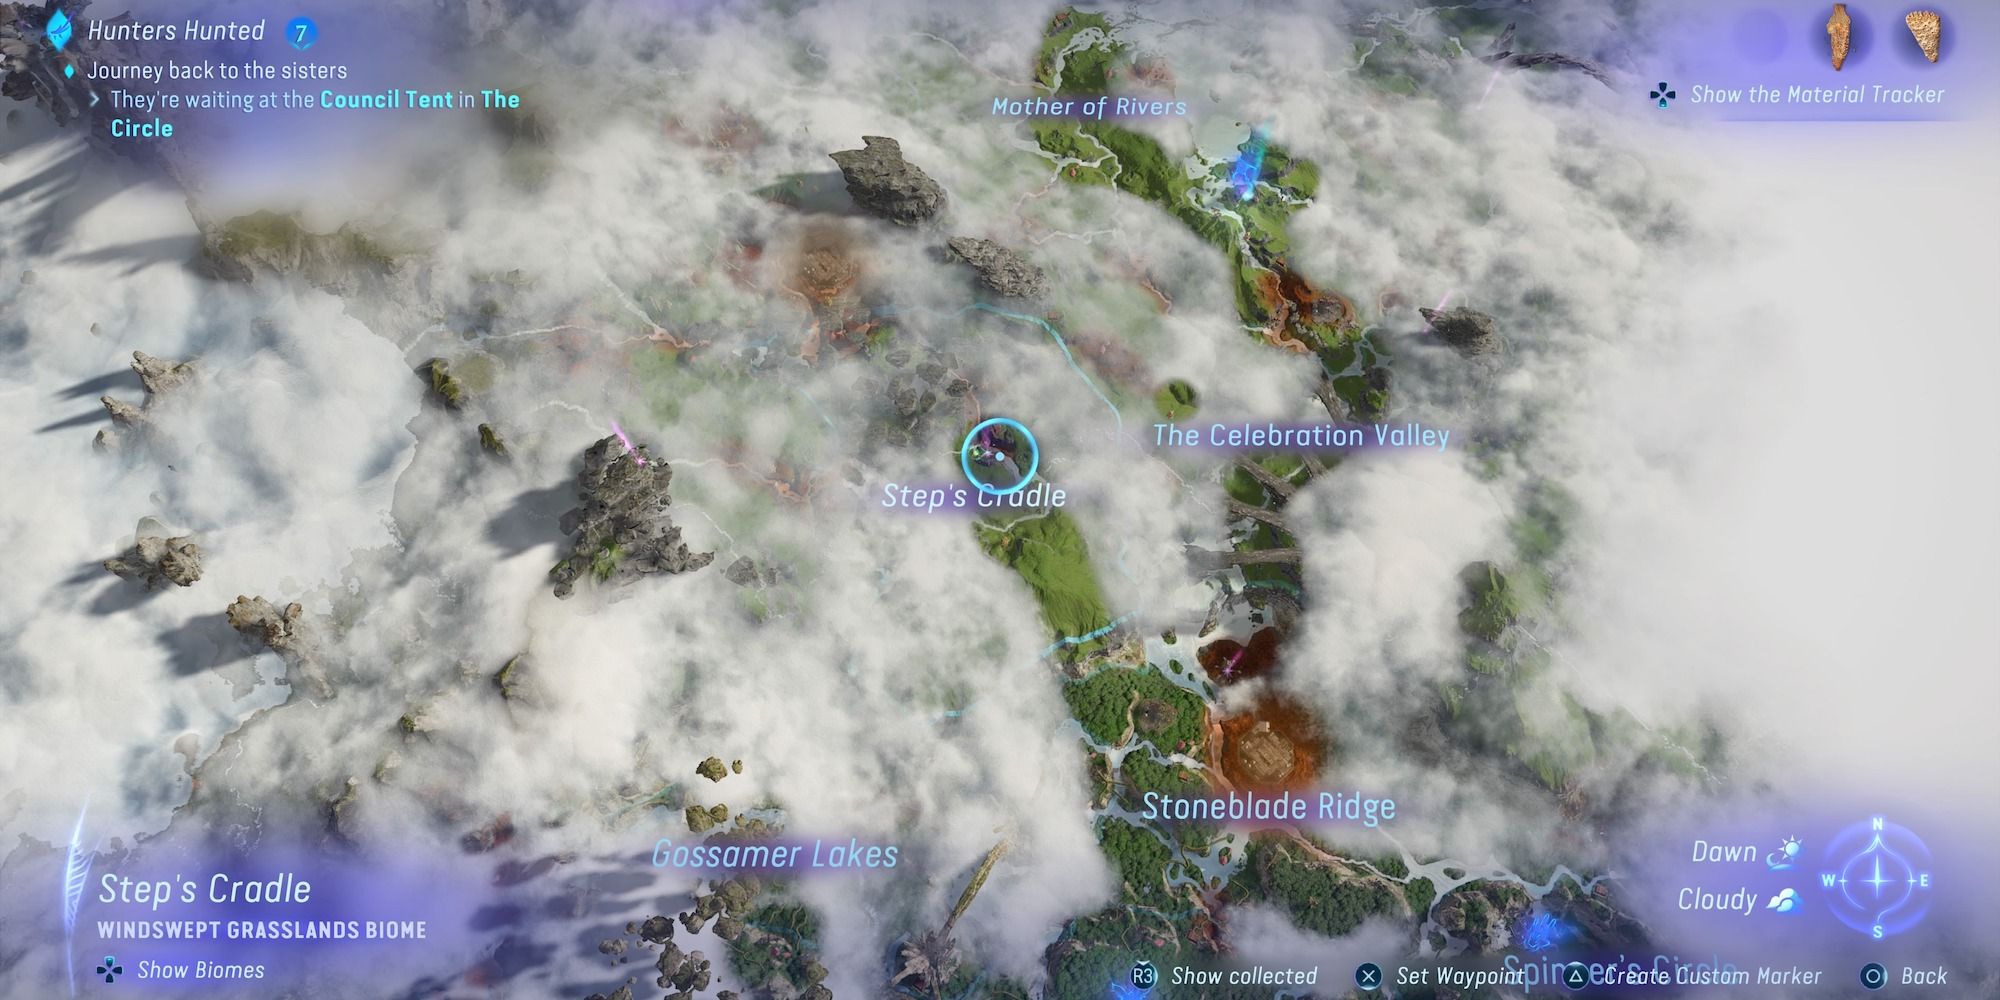 Avatar Frontiers of Pandora Map